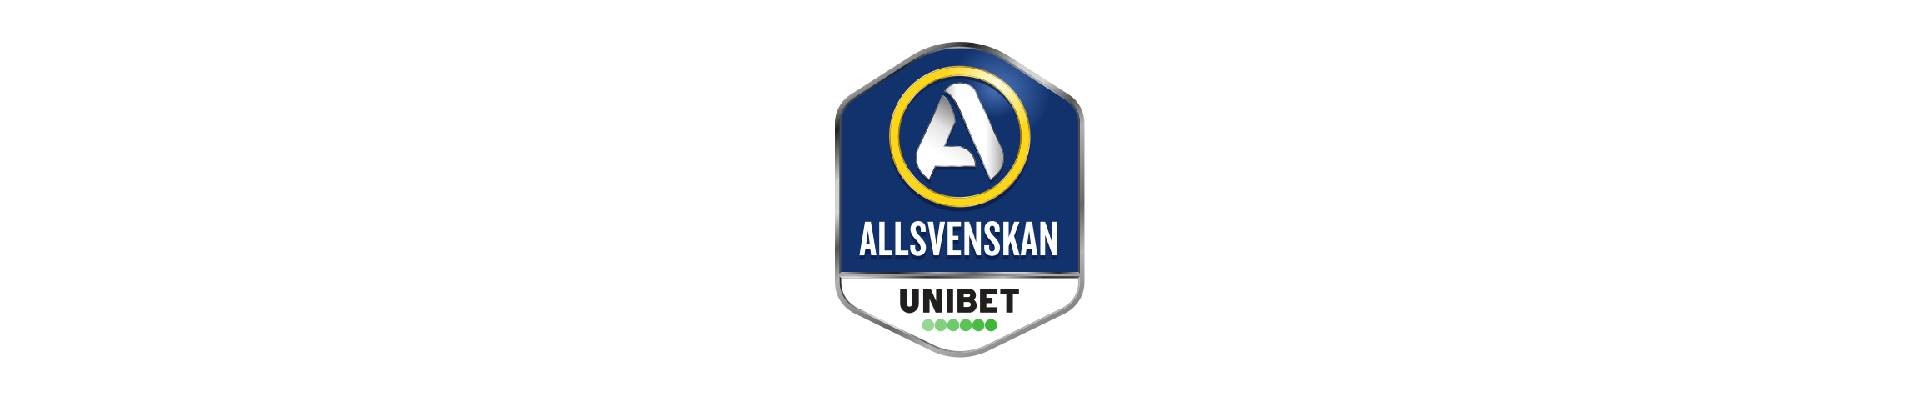 İsveç Allsvenskan Maç Biletleri